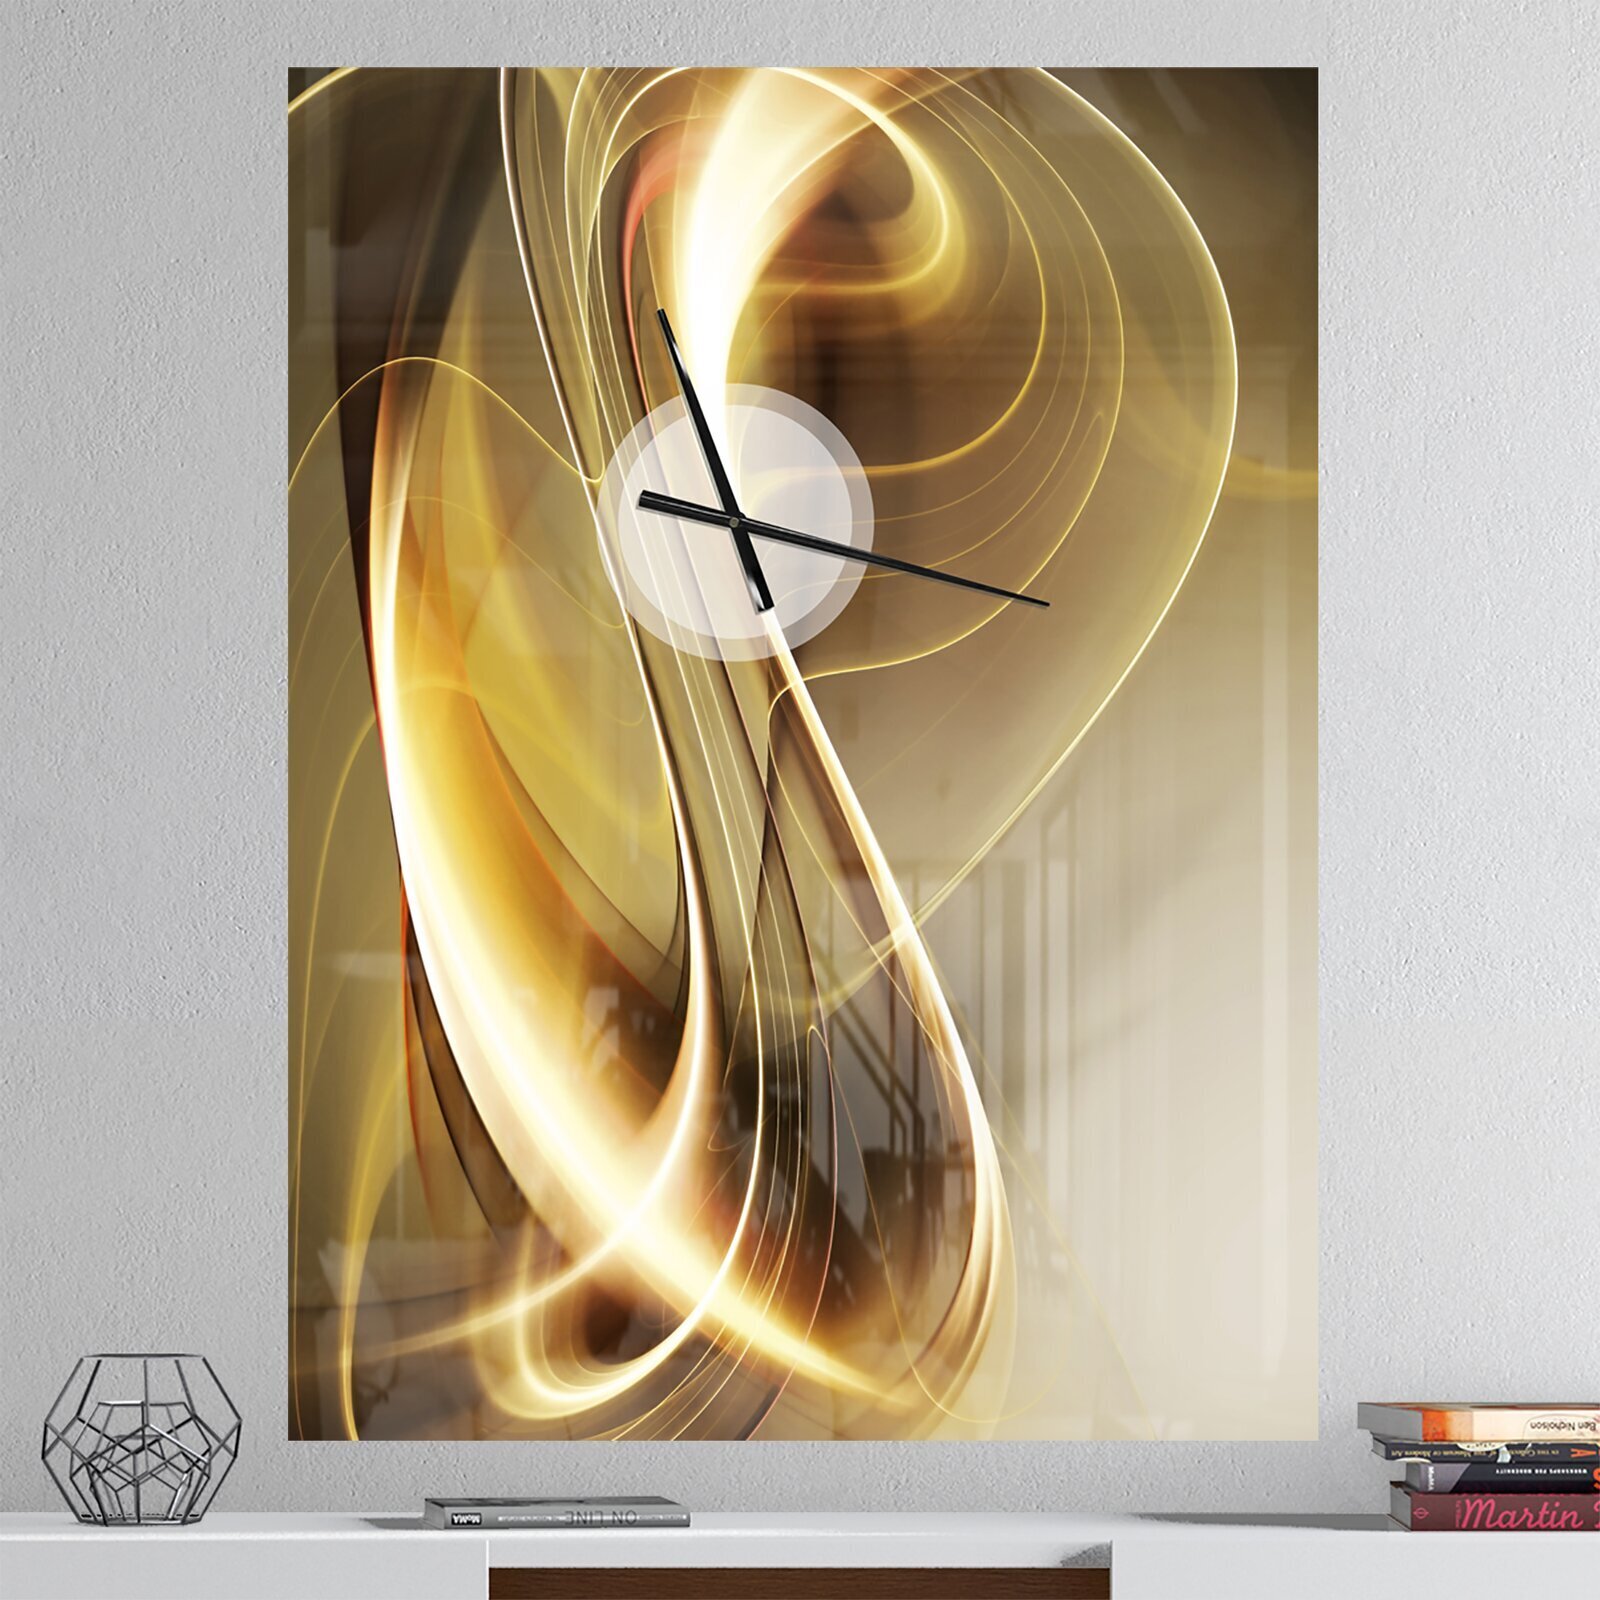 Artwork style long wall clock